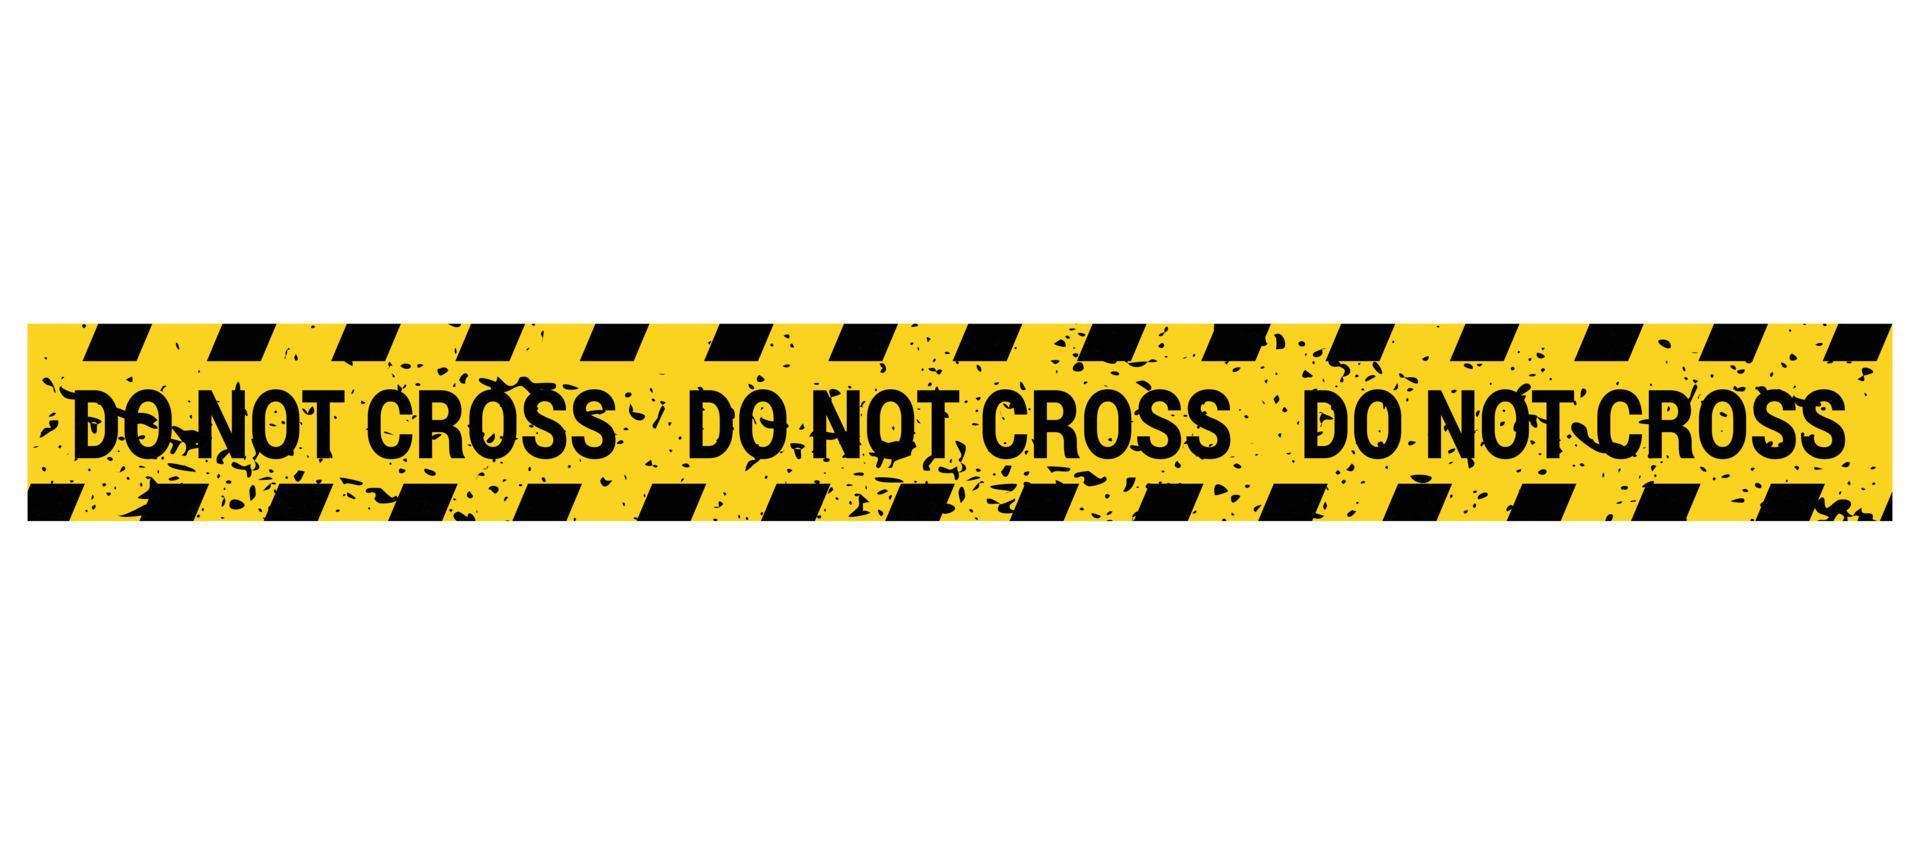 Police line do not cross. Barrier tape. Crime scene border. Safety type.  Accident restriction line. Isolated on white background. Vector  illustration